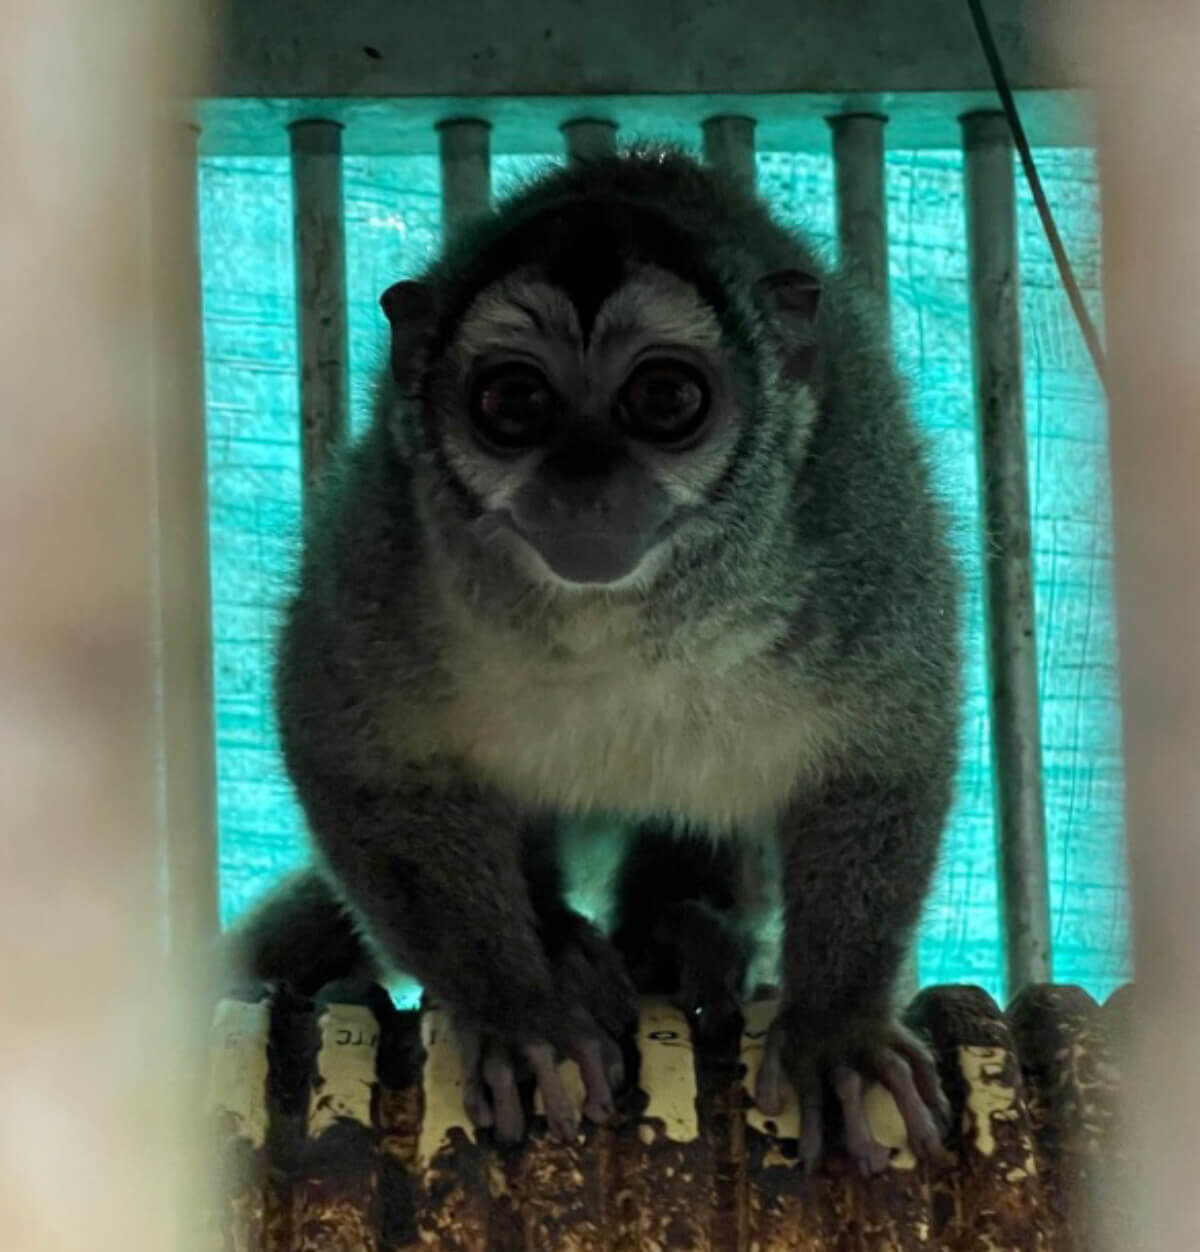 https://investigaciones.petalatino.com/wp-content/uploads/2022/11/VIV-Colombia-Fundacion-Centro-de-Primates-FUCEP-An-Aotus-monkey-perched-on-a-corrugated-pipe-nest-covered-with-feces-PO-VS-e1669239192241.jpg